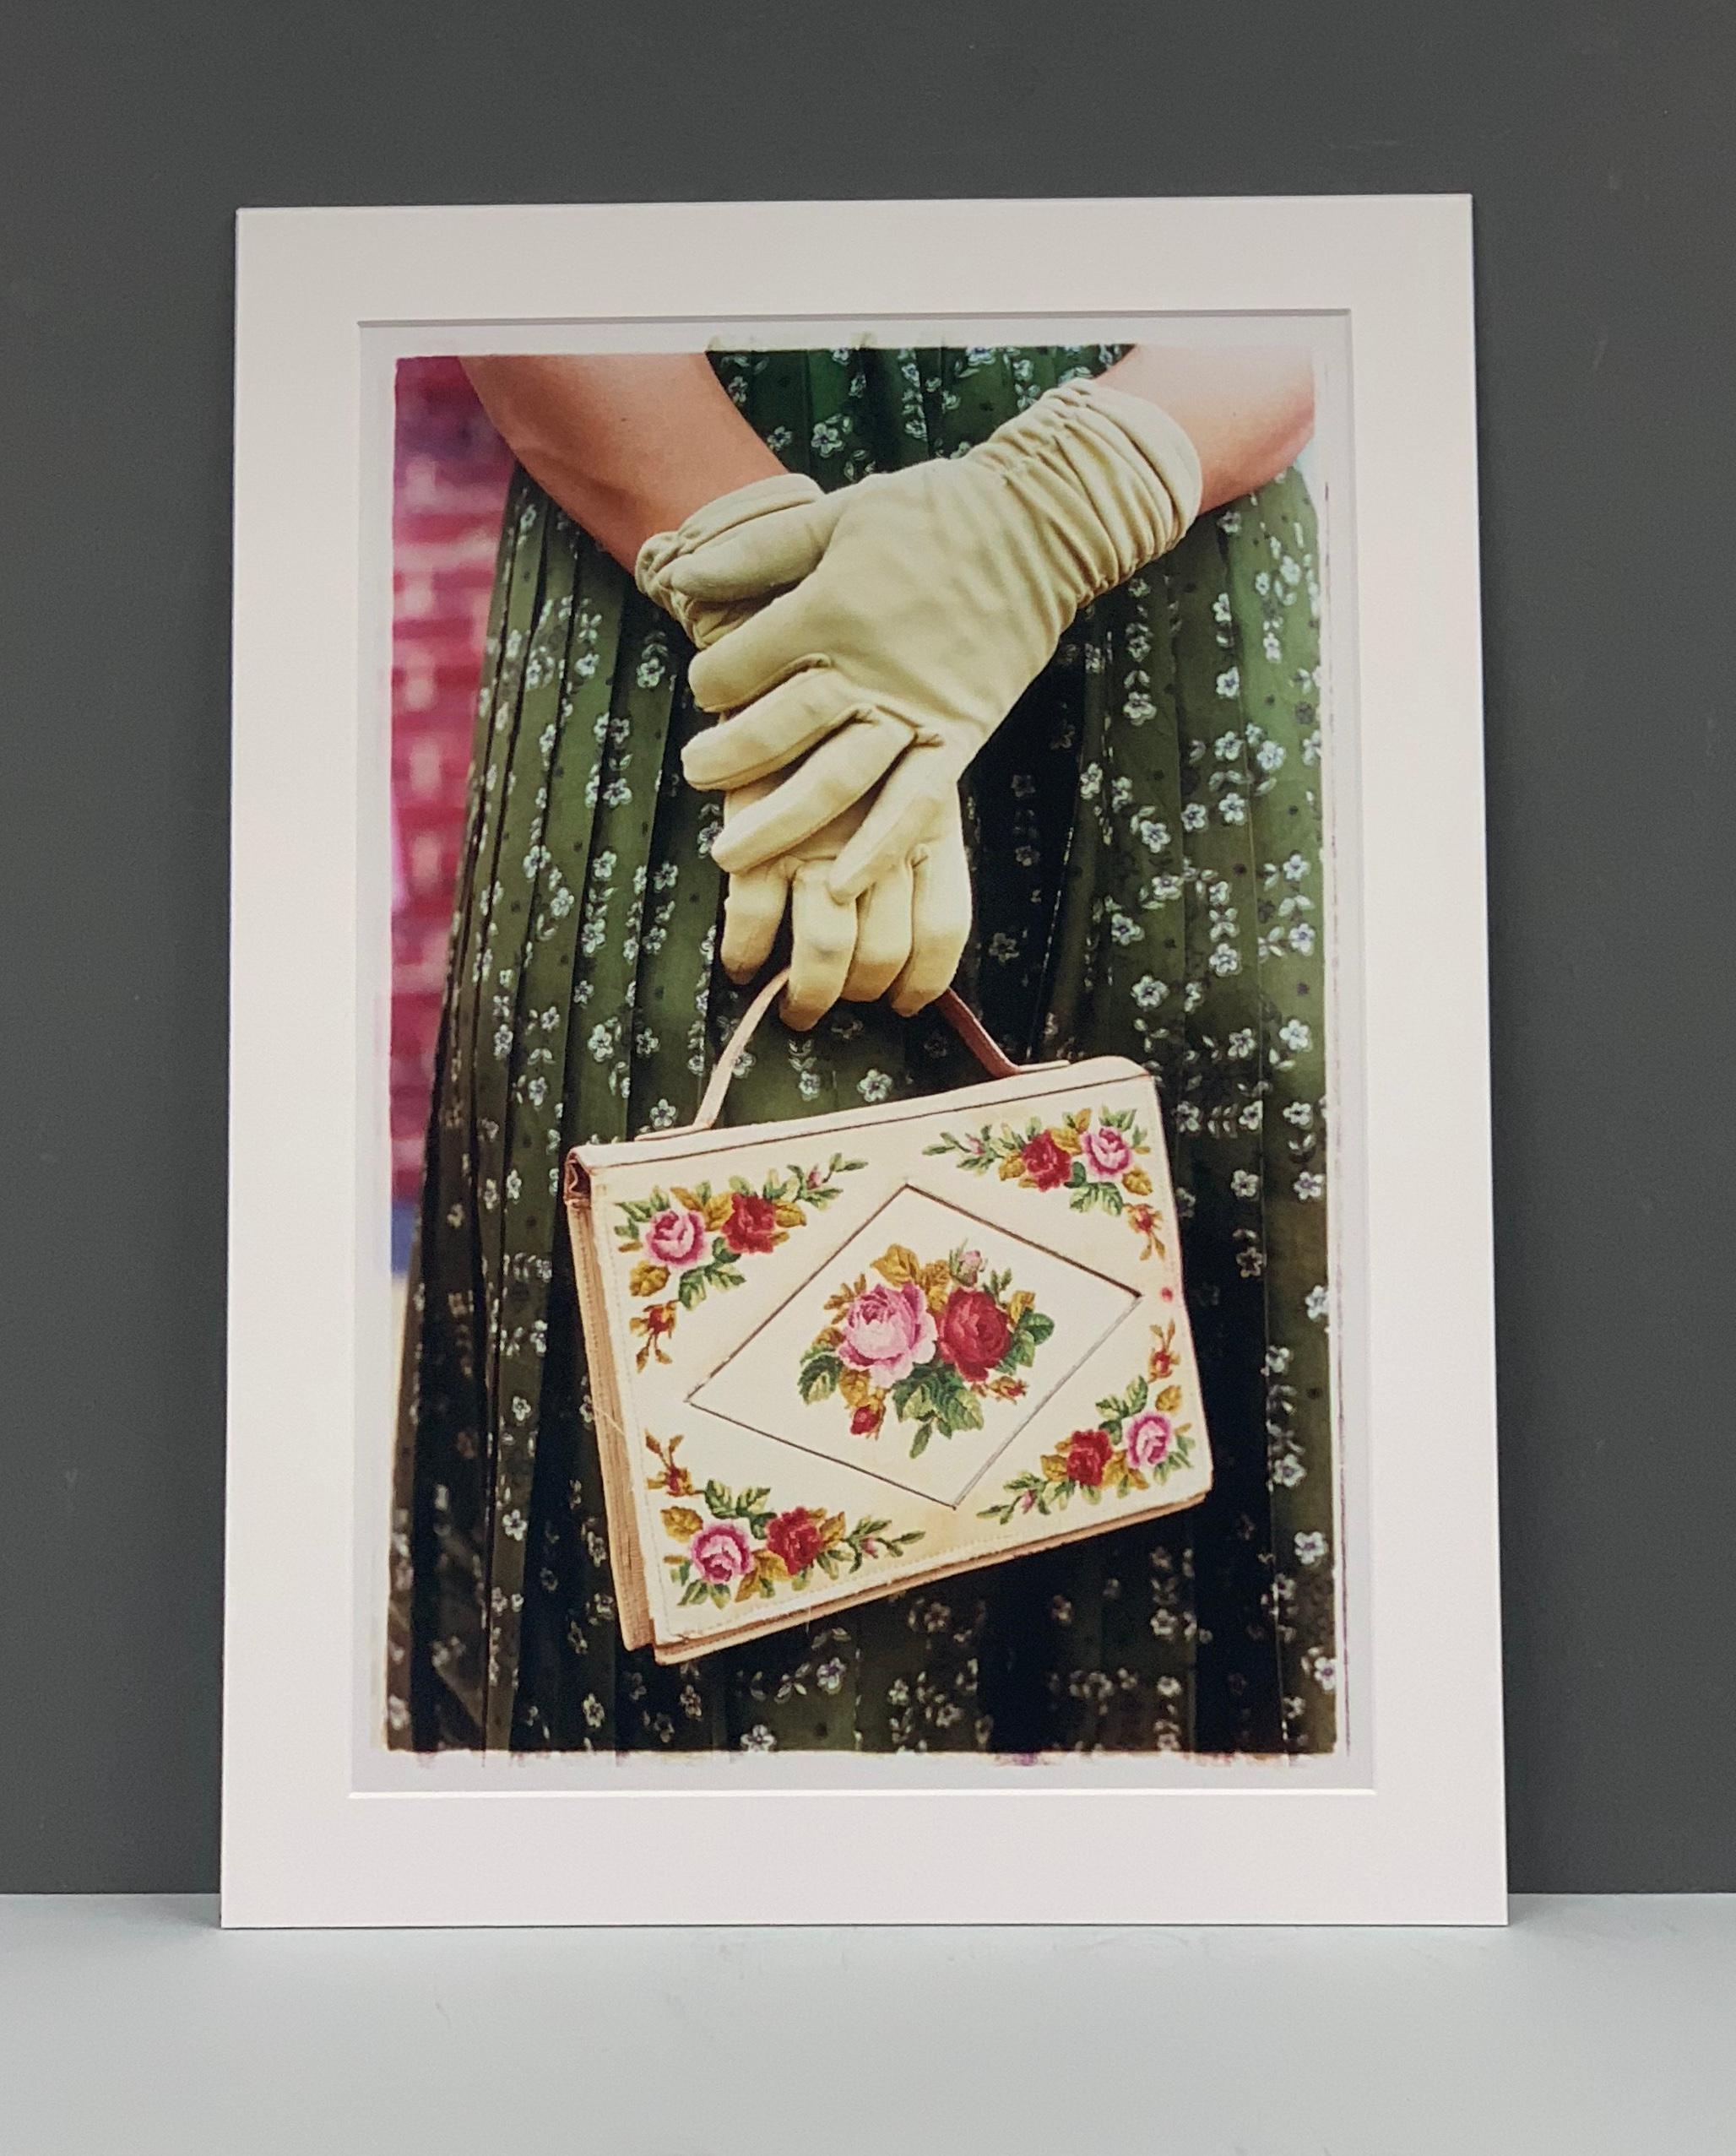 Gloves & Handbag, Goodwood, Chichester - Feminine fashion, color photography - Black Color Photograph by Richard Heeps